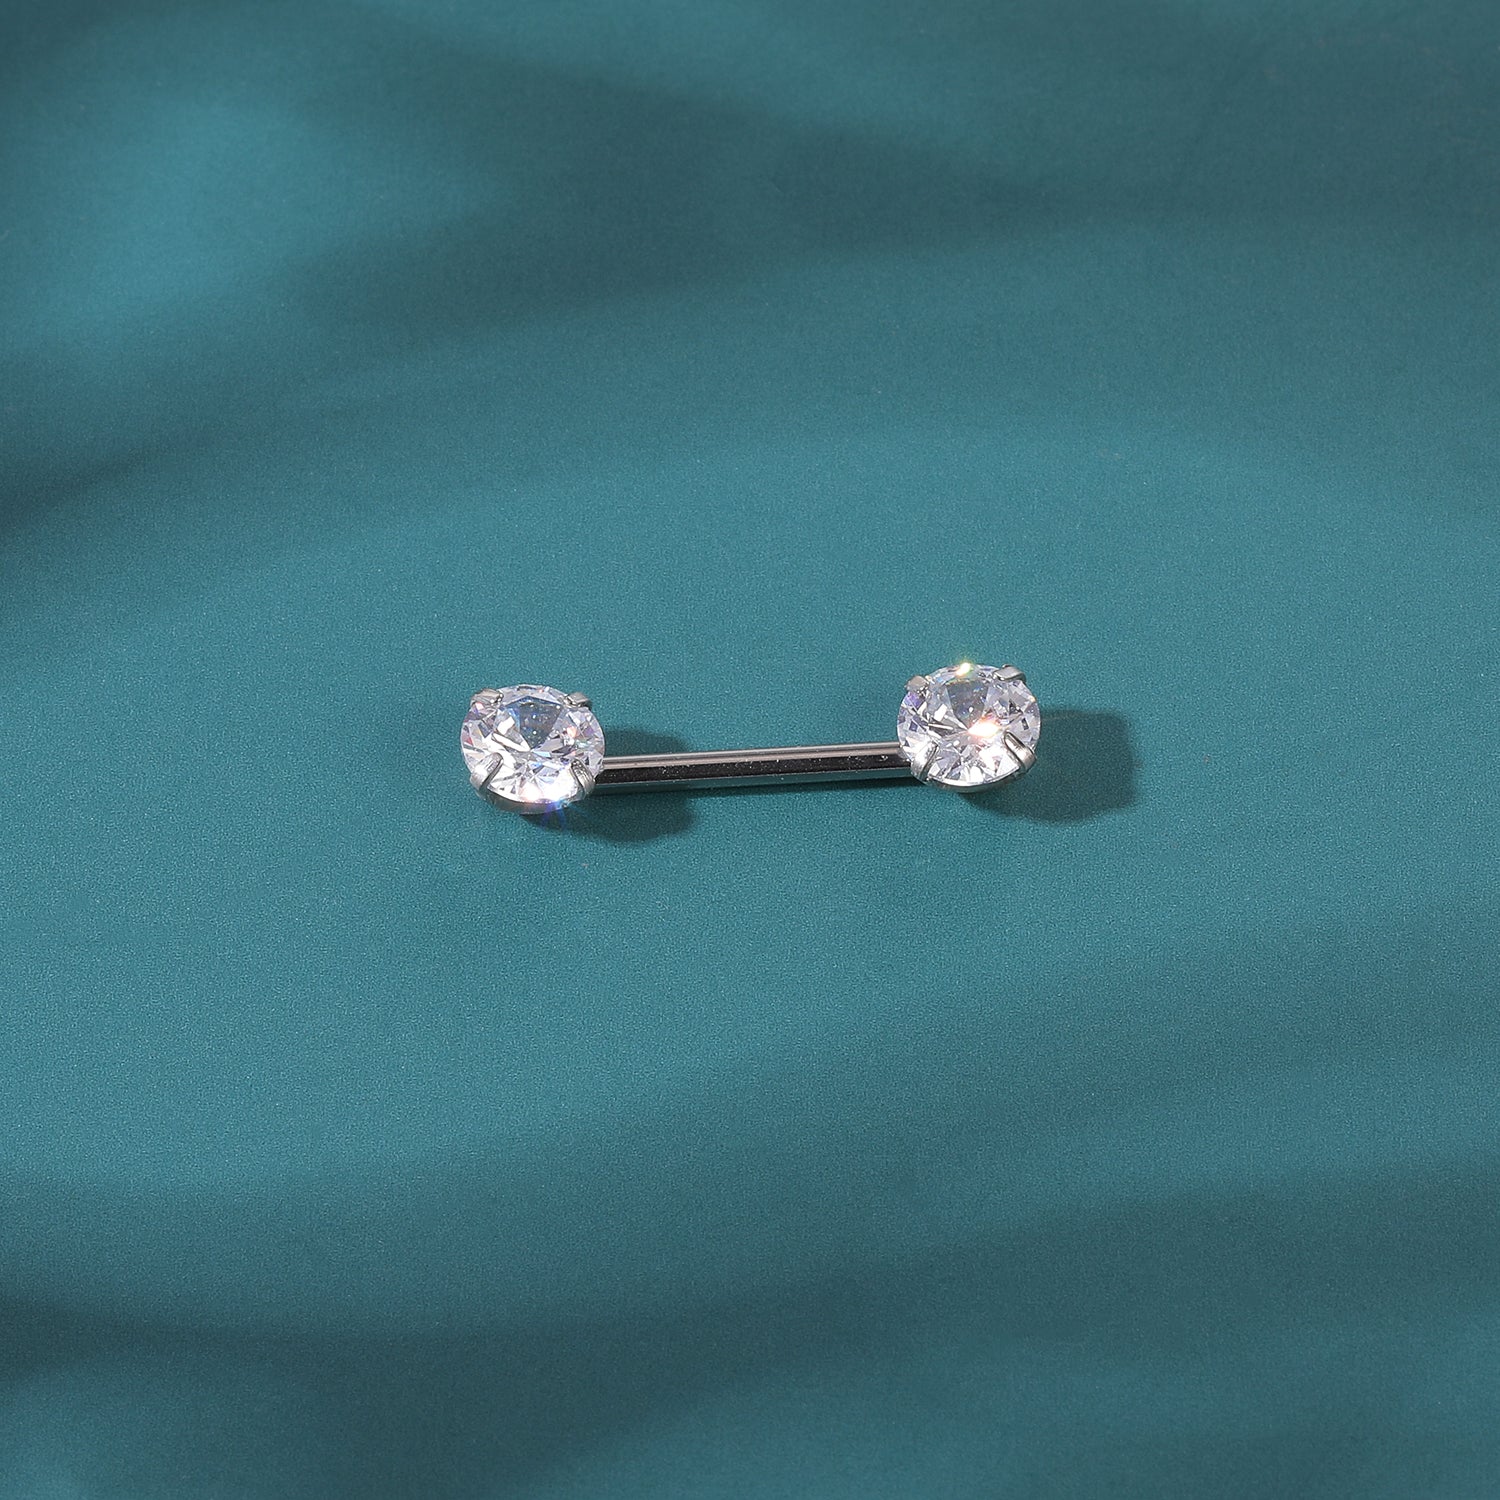 2pcs 14G Plug-in Nipple Ring Claw White Crystal Nipple Piercings